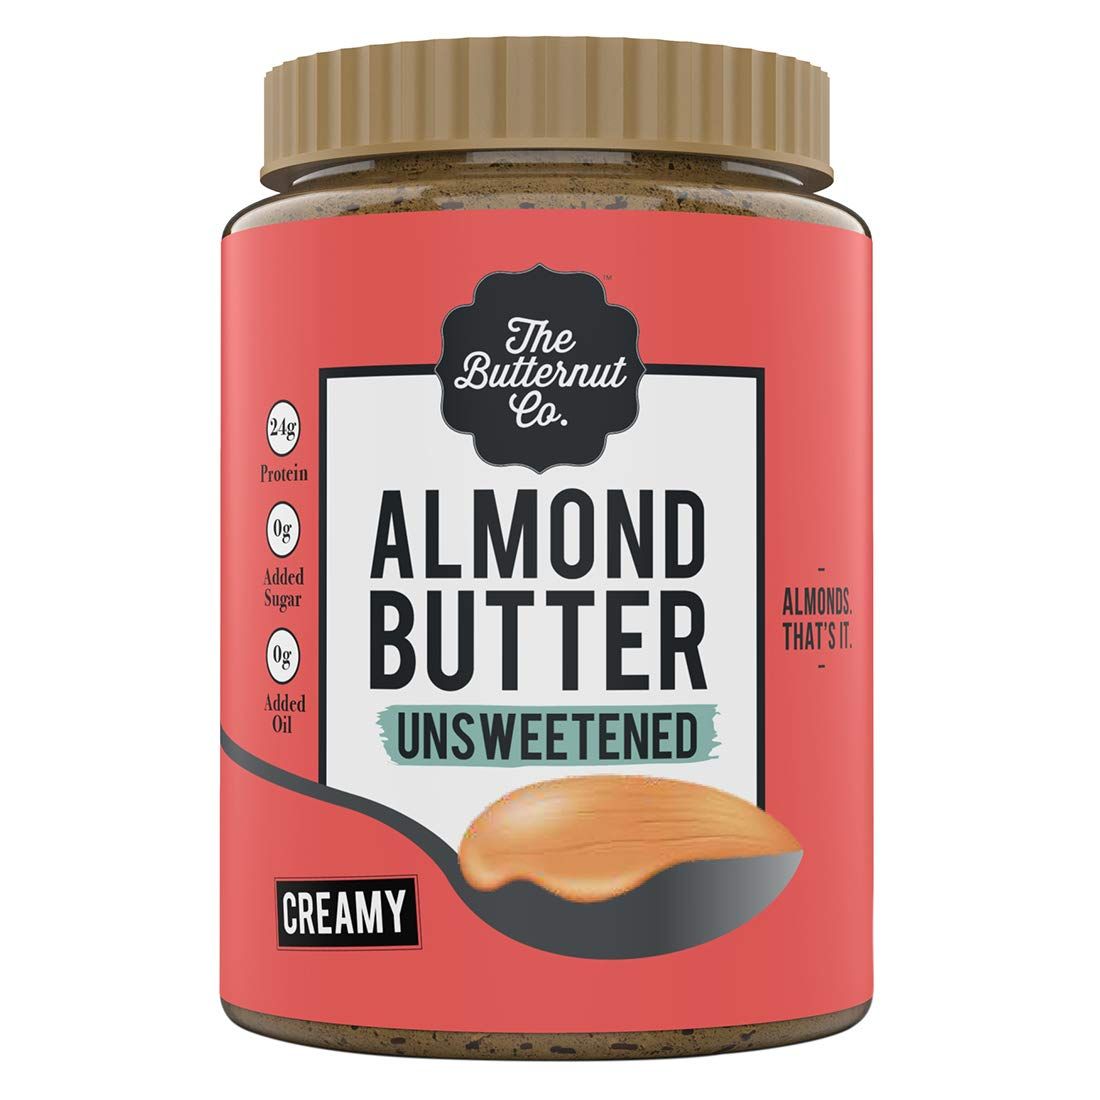 The Butternut Co Almond Butter Creamy Image